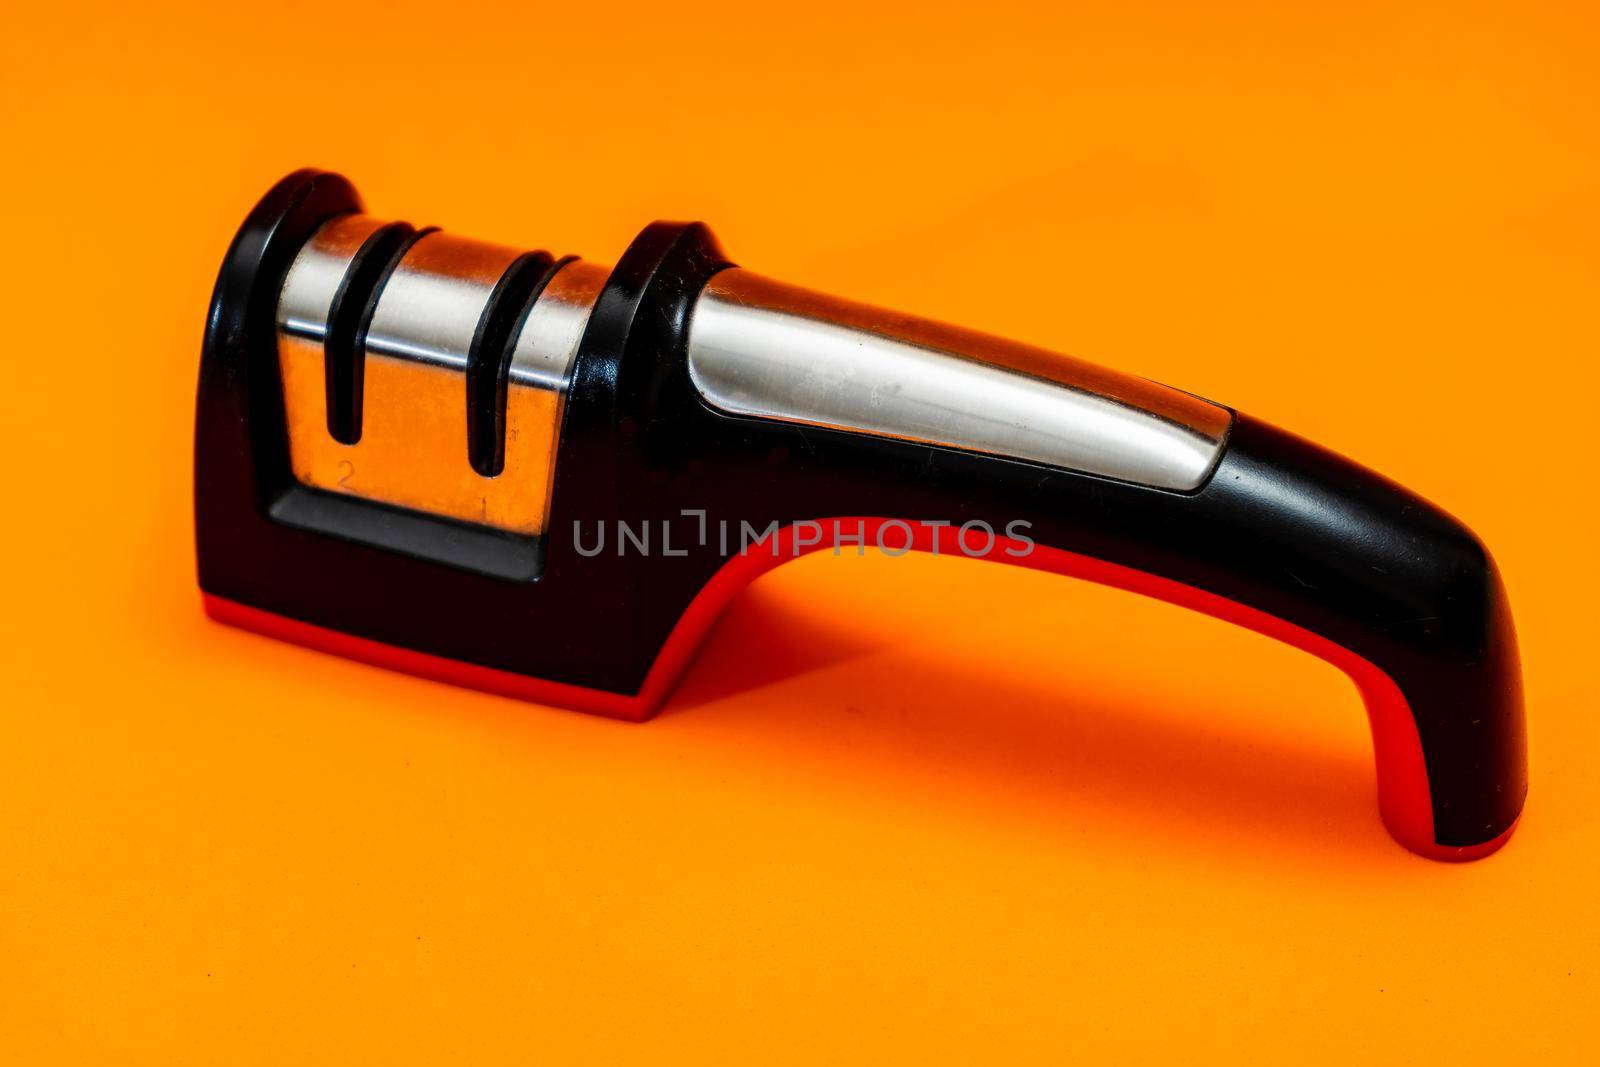 Knife sharpener isolated on an orange background.